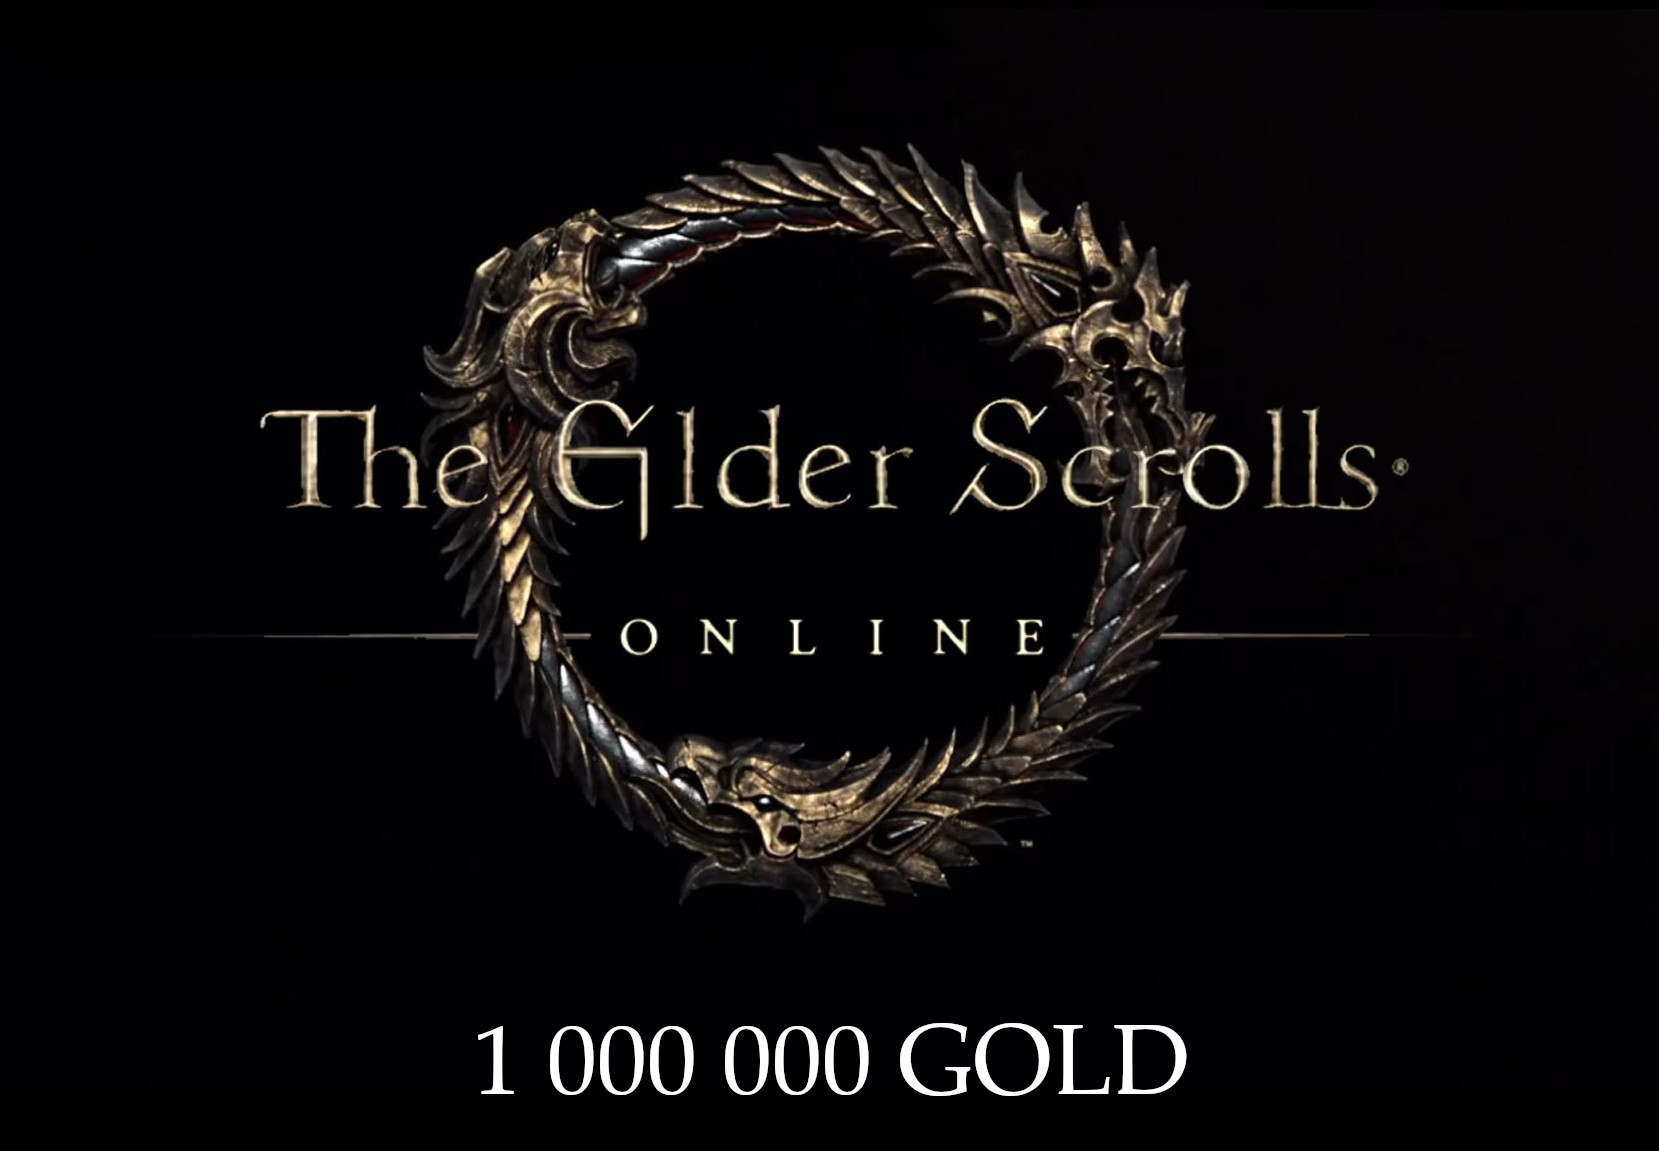 The Elder Scrolls Online - 1000k Gold - NORTH AMERICA PC/MAC